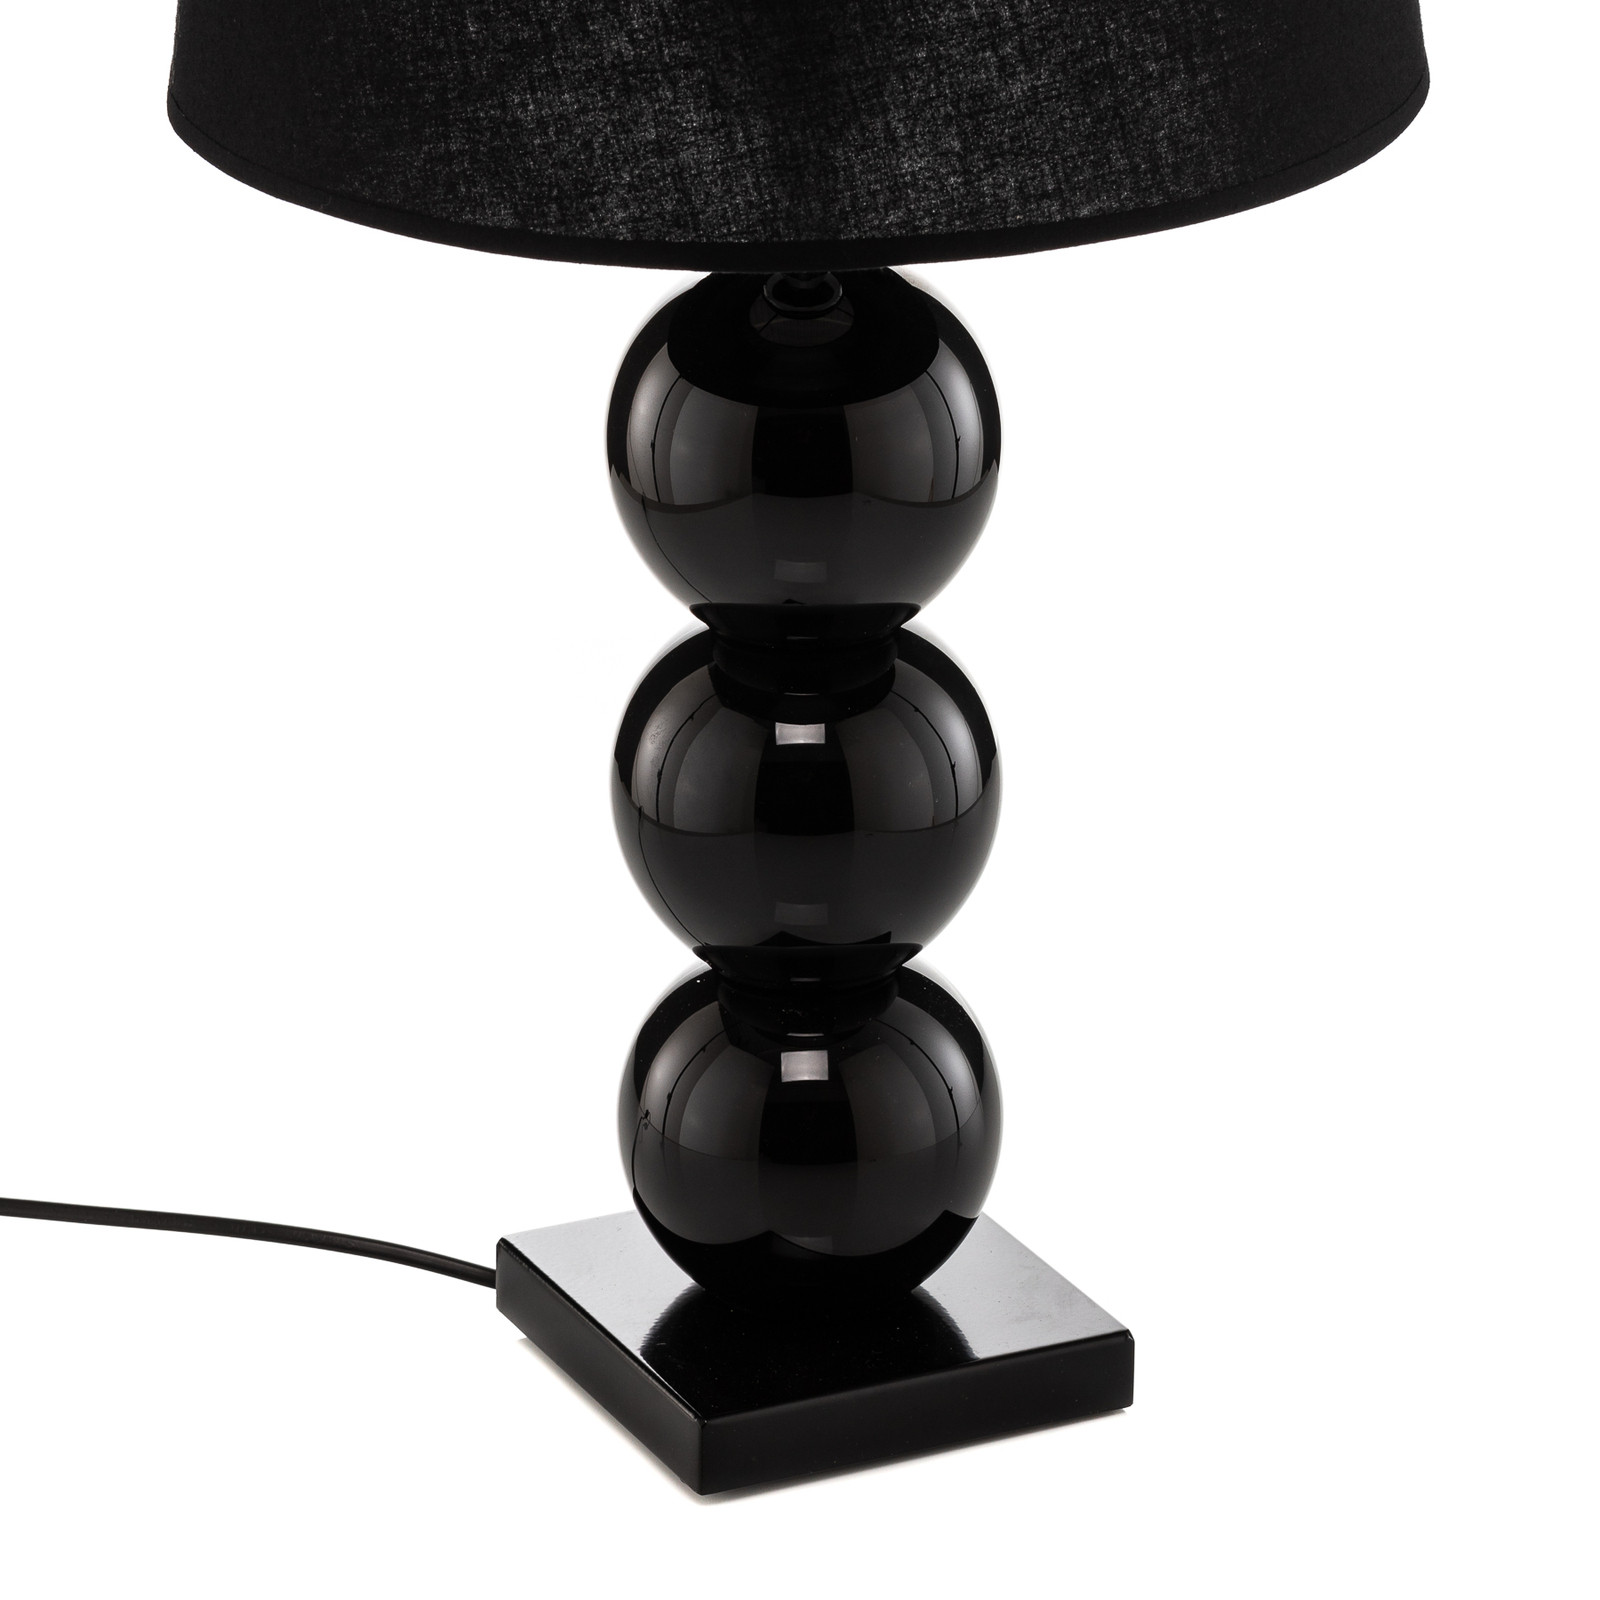 Textiel-tafellamp Fulda, glasdecor, zwart